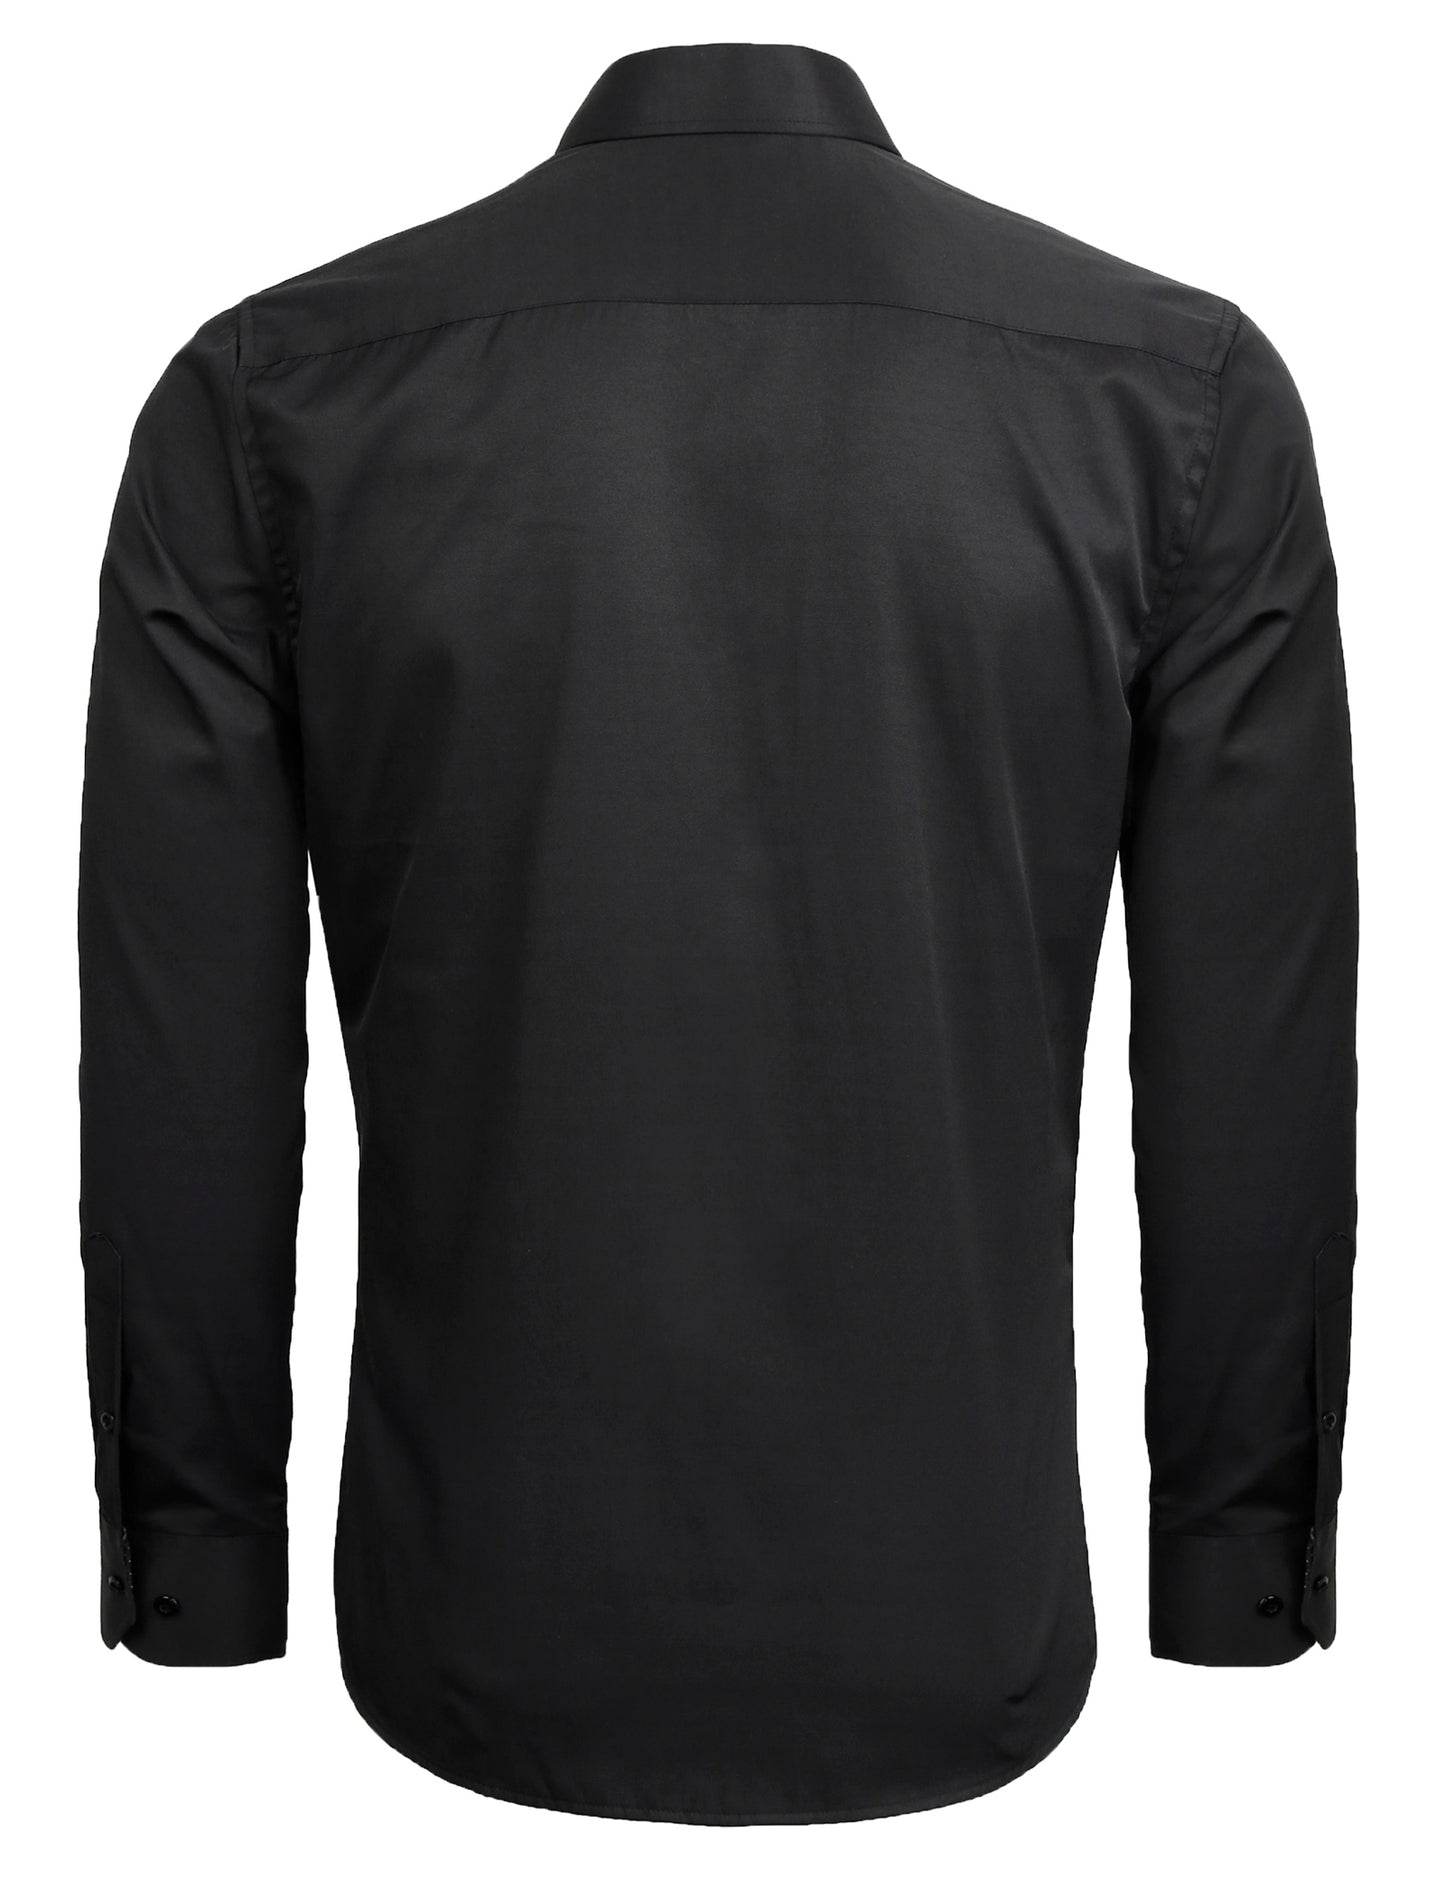 Men's Long Sleeve Dress Shirts Polka Dot Patchwork Button Down Formal Shirts, 116-Black+Black Dots